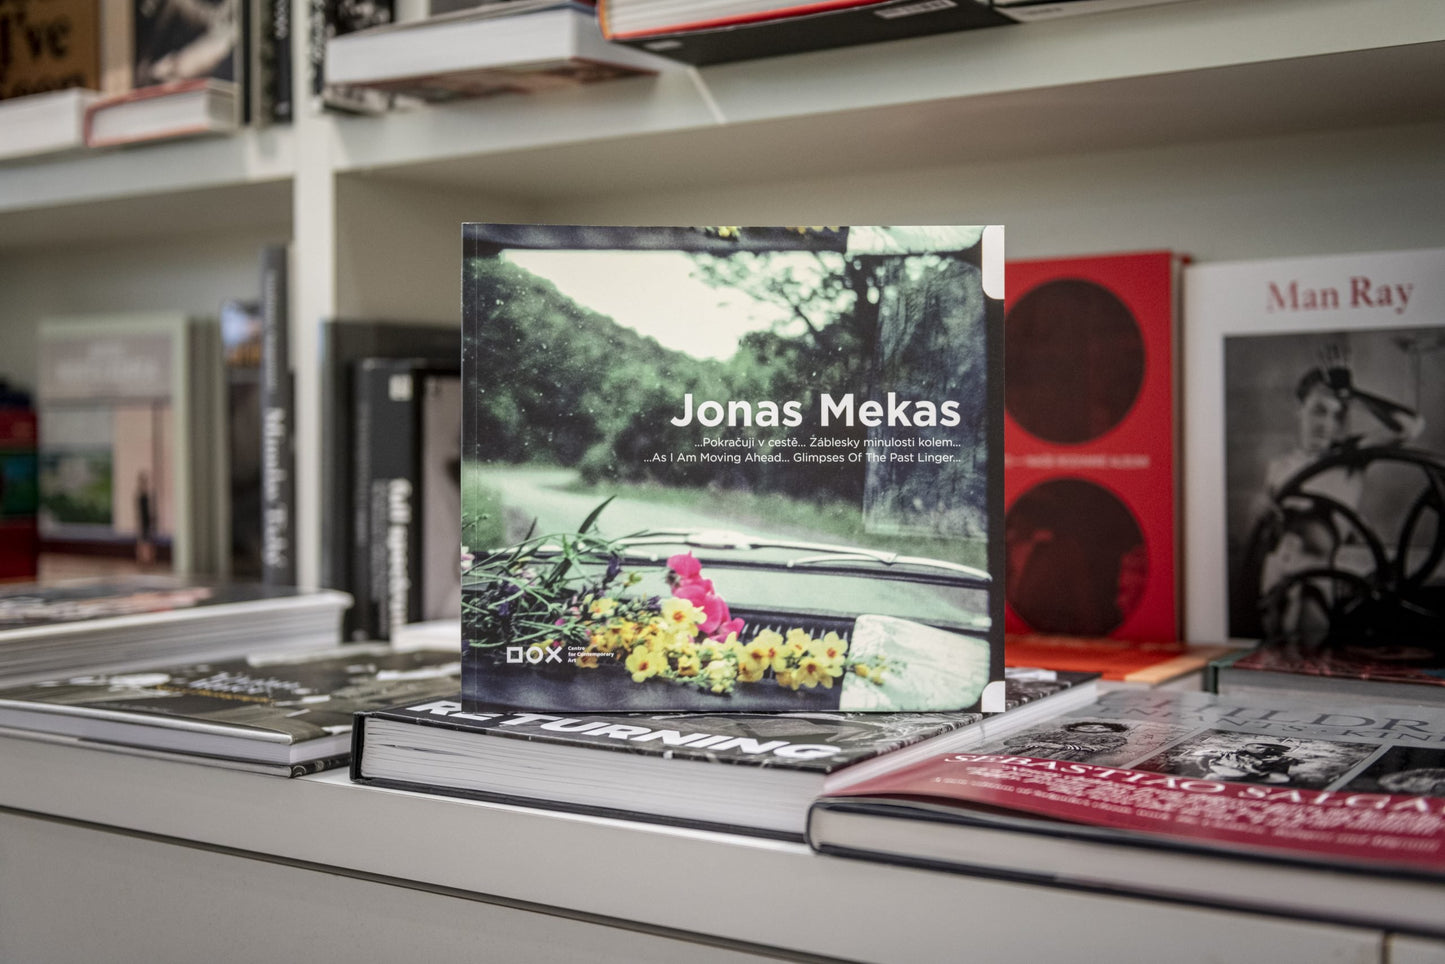 Jonas Mekas: …I continue my journey… Glimpses of the past around…